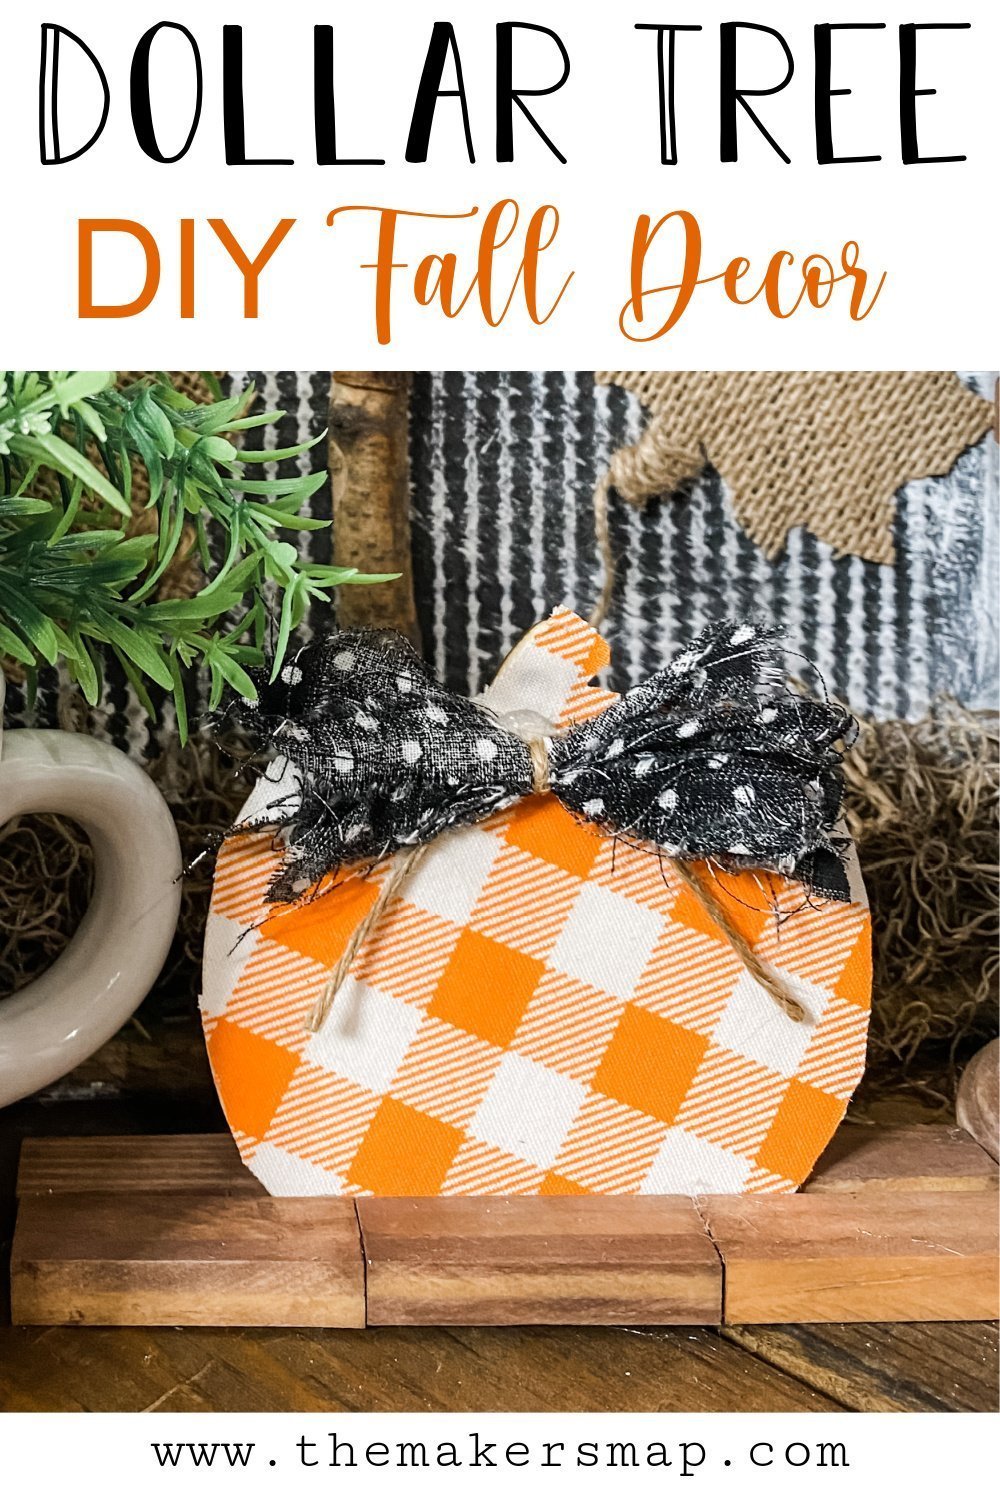 How to Make a Dollar Tree Mini Pumpkin DIY Fall Decor